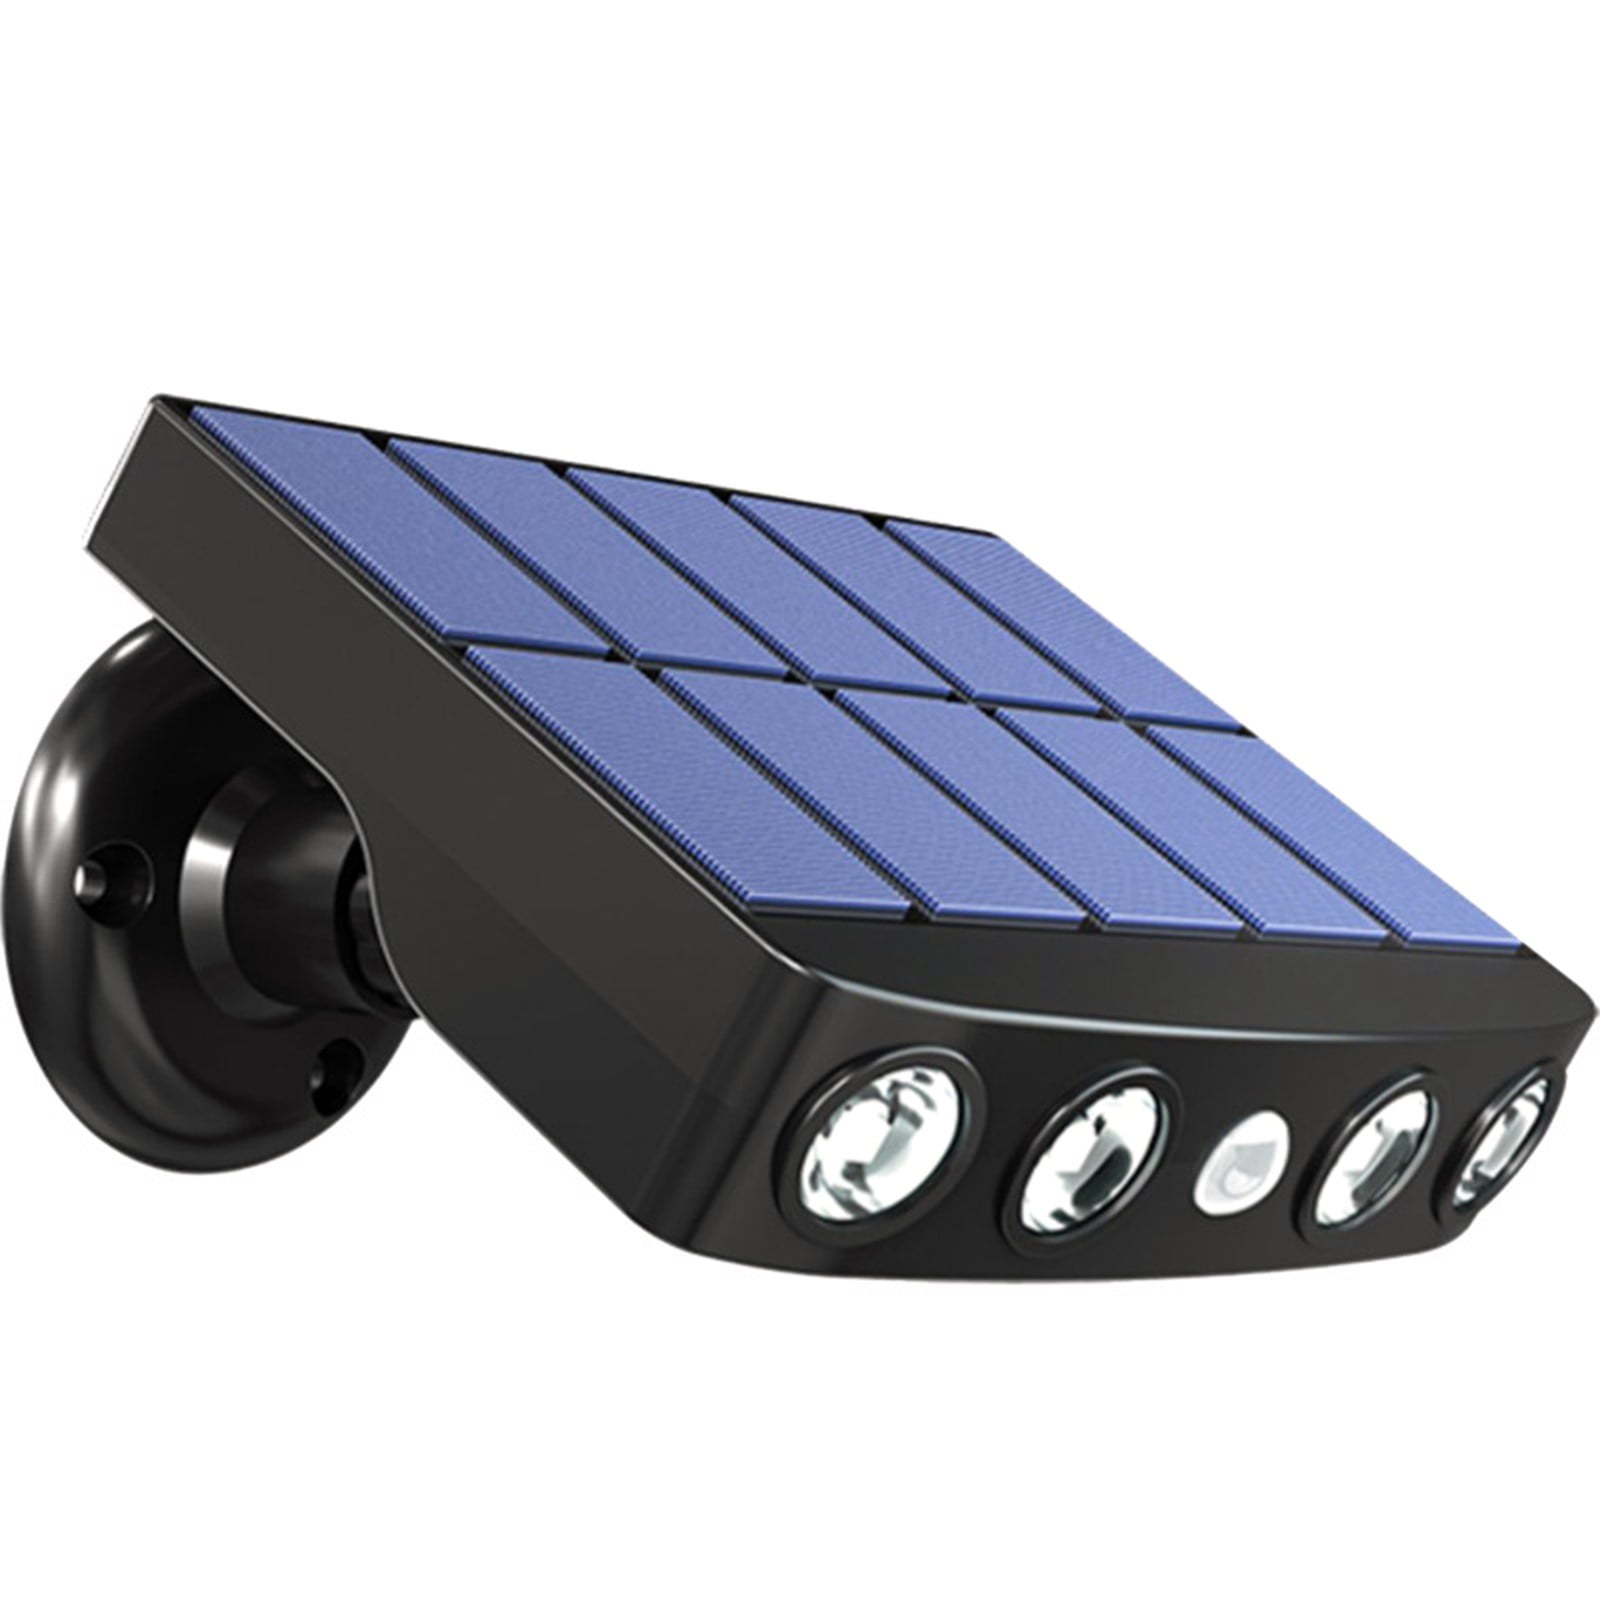 16 LED Solar Power Motion Sensor Garden Security Light Lamp Outdoor Waterproof